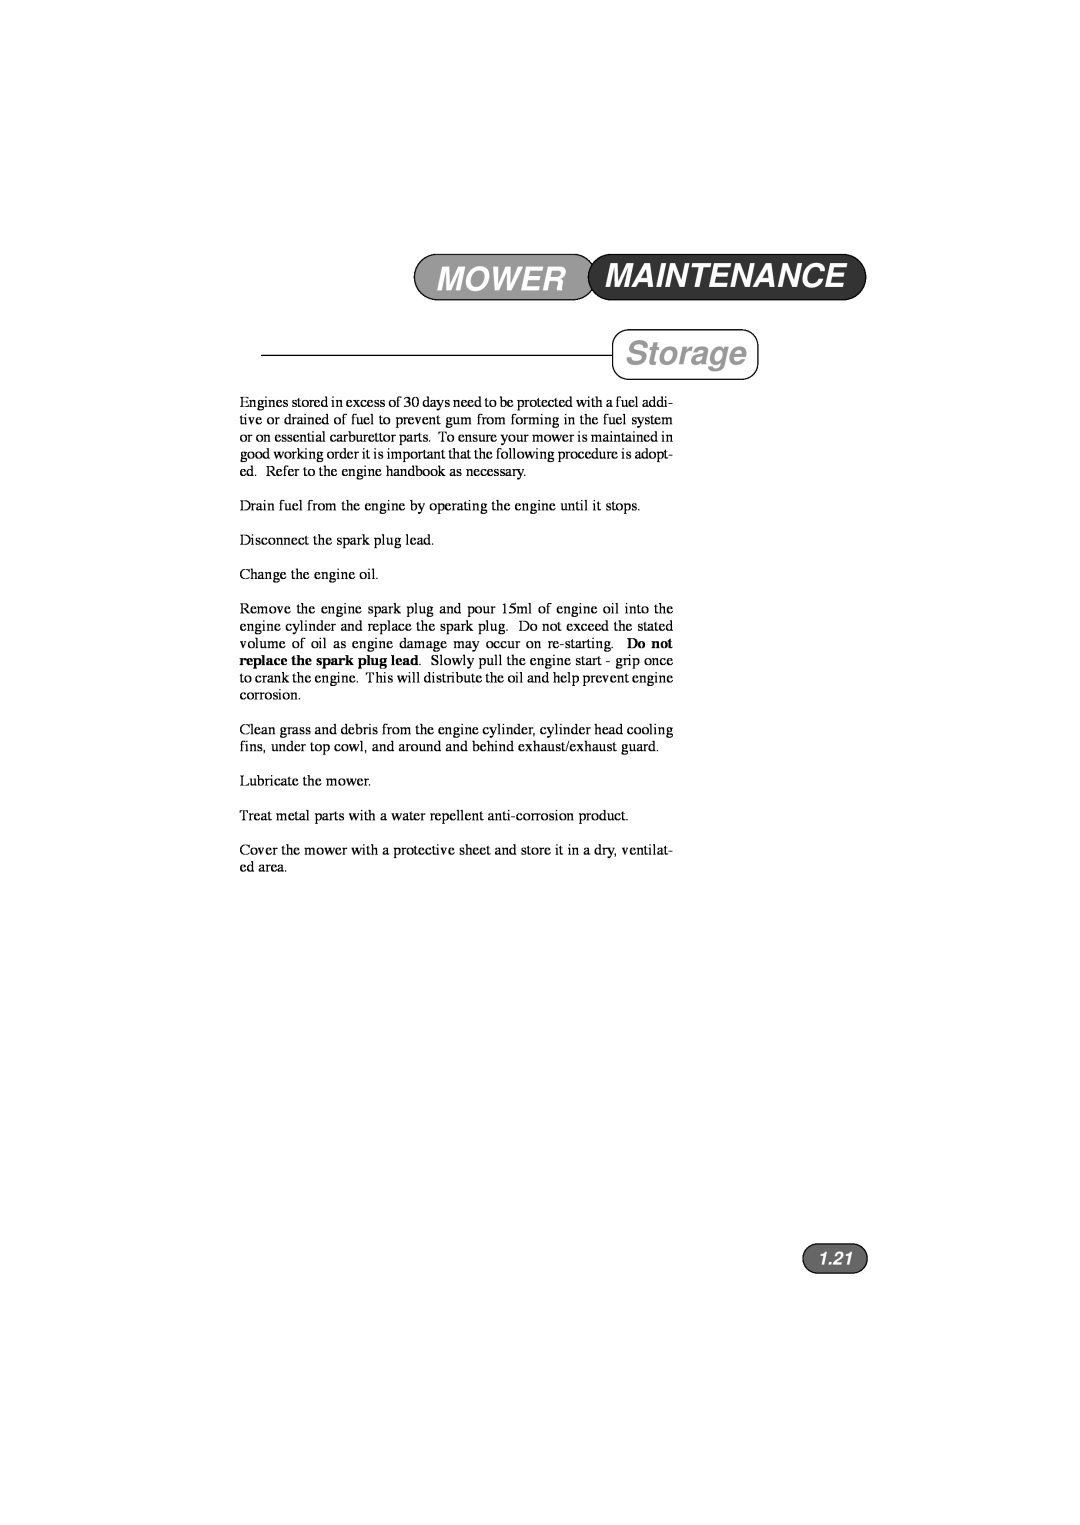 Hayter Mowers 453, 450, 446 Hovertrim manual Storage, 1.21, Mower Maintenance 